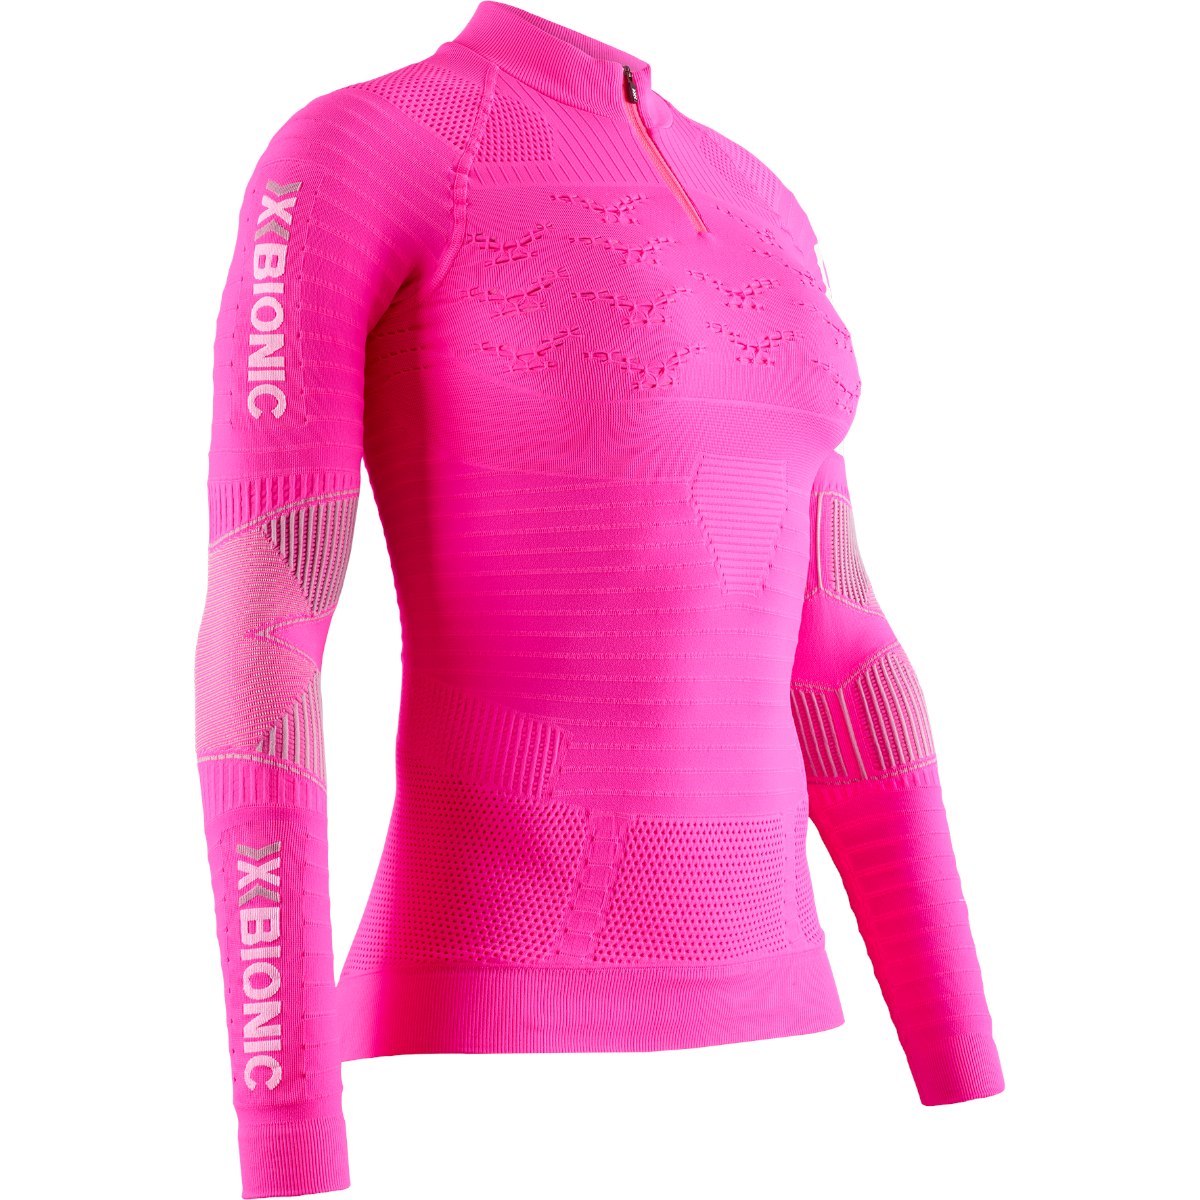 Picture of X-Bionic Effektor 4.0 Trail Run Half Zip Long Sleeves Shirt for Women - flamingo pink/artic white